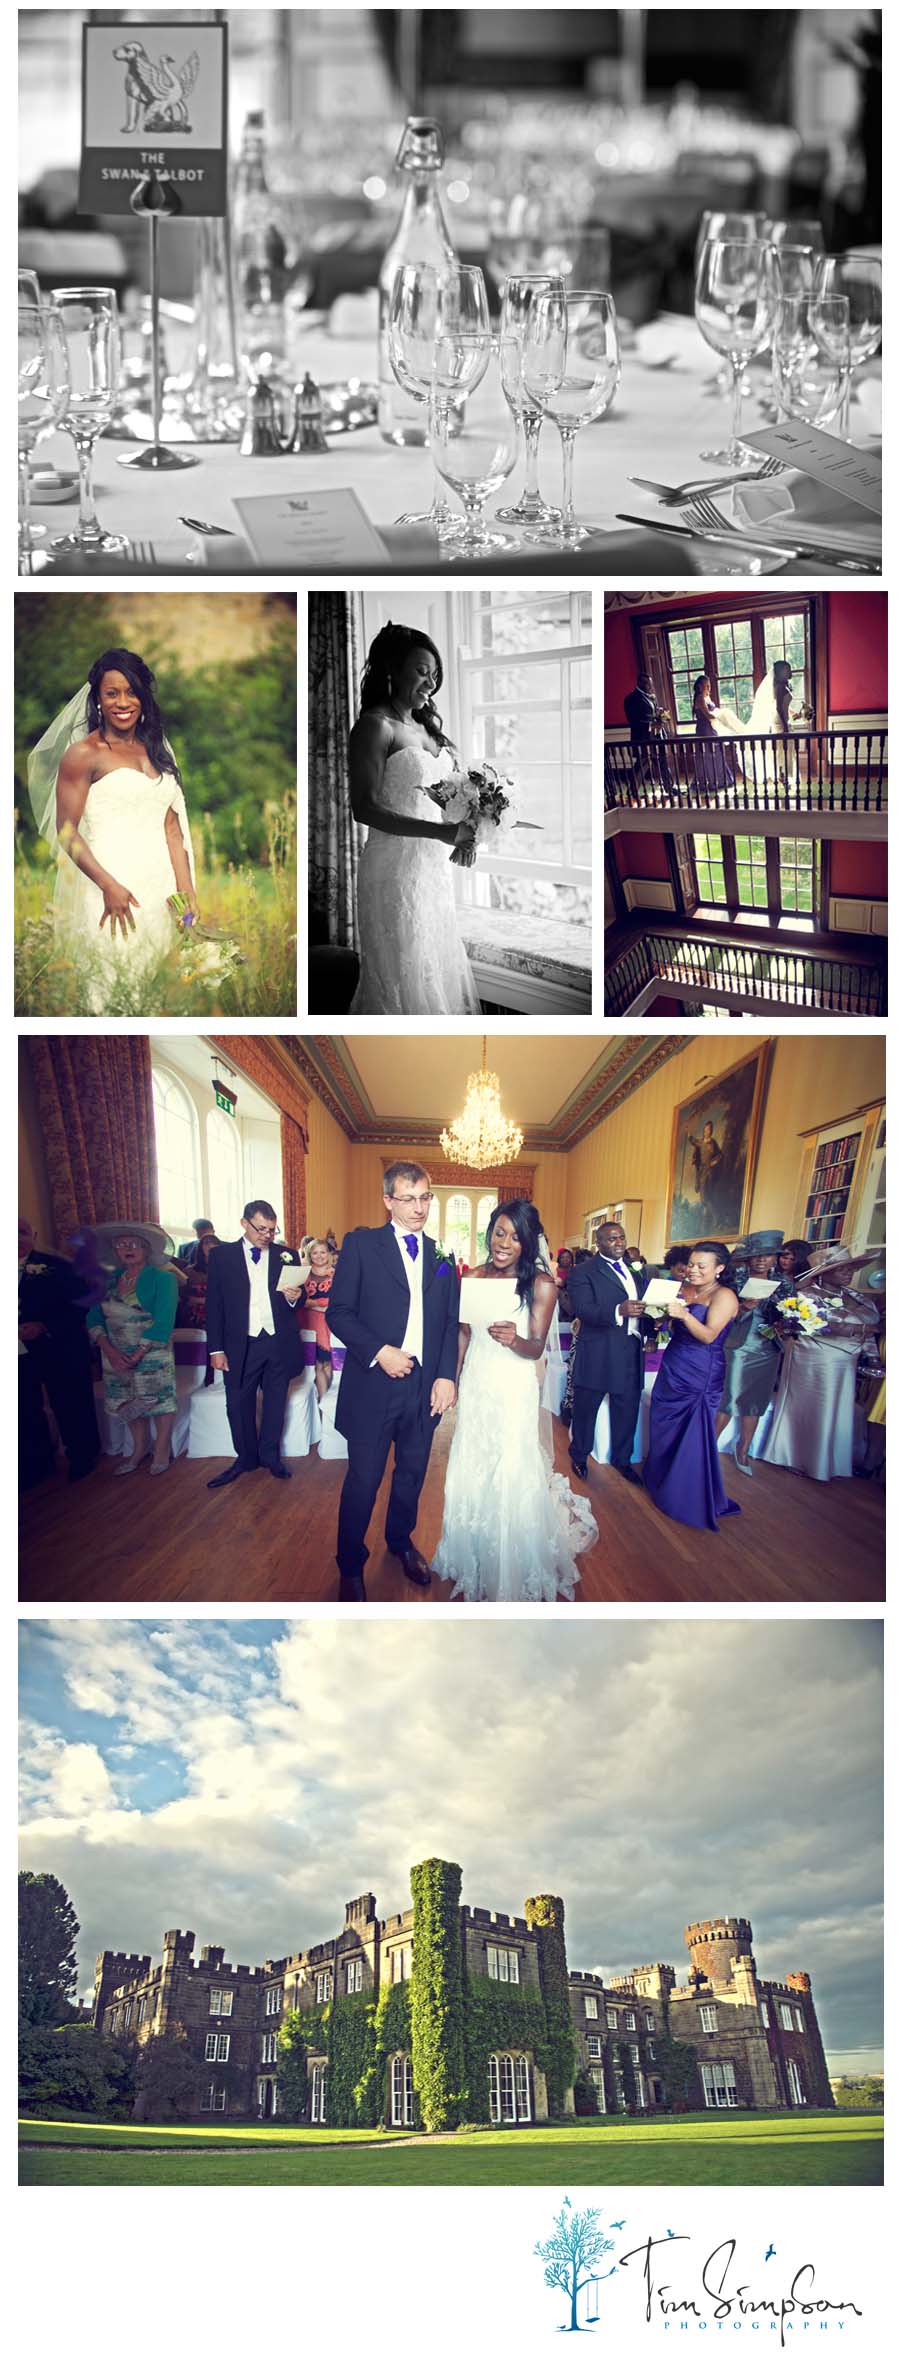 Wedding photographs at a castle